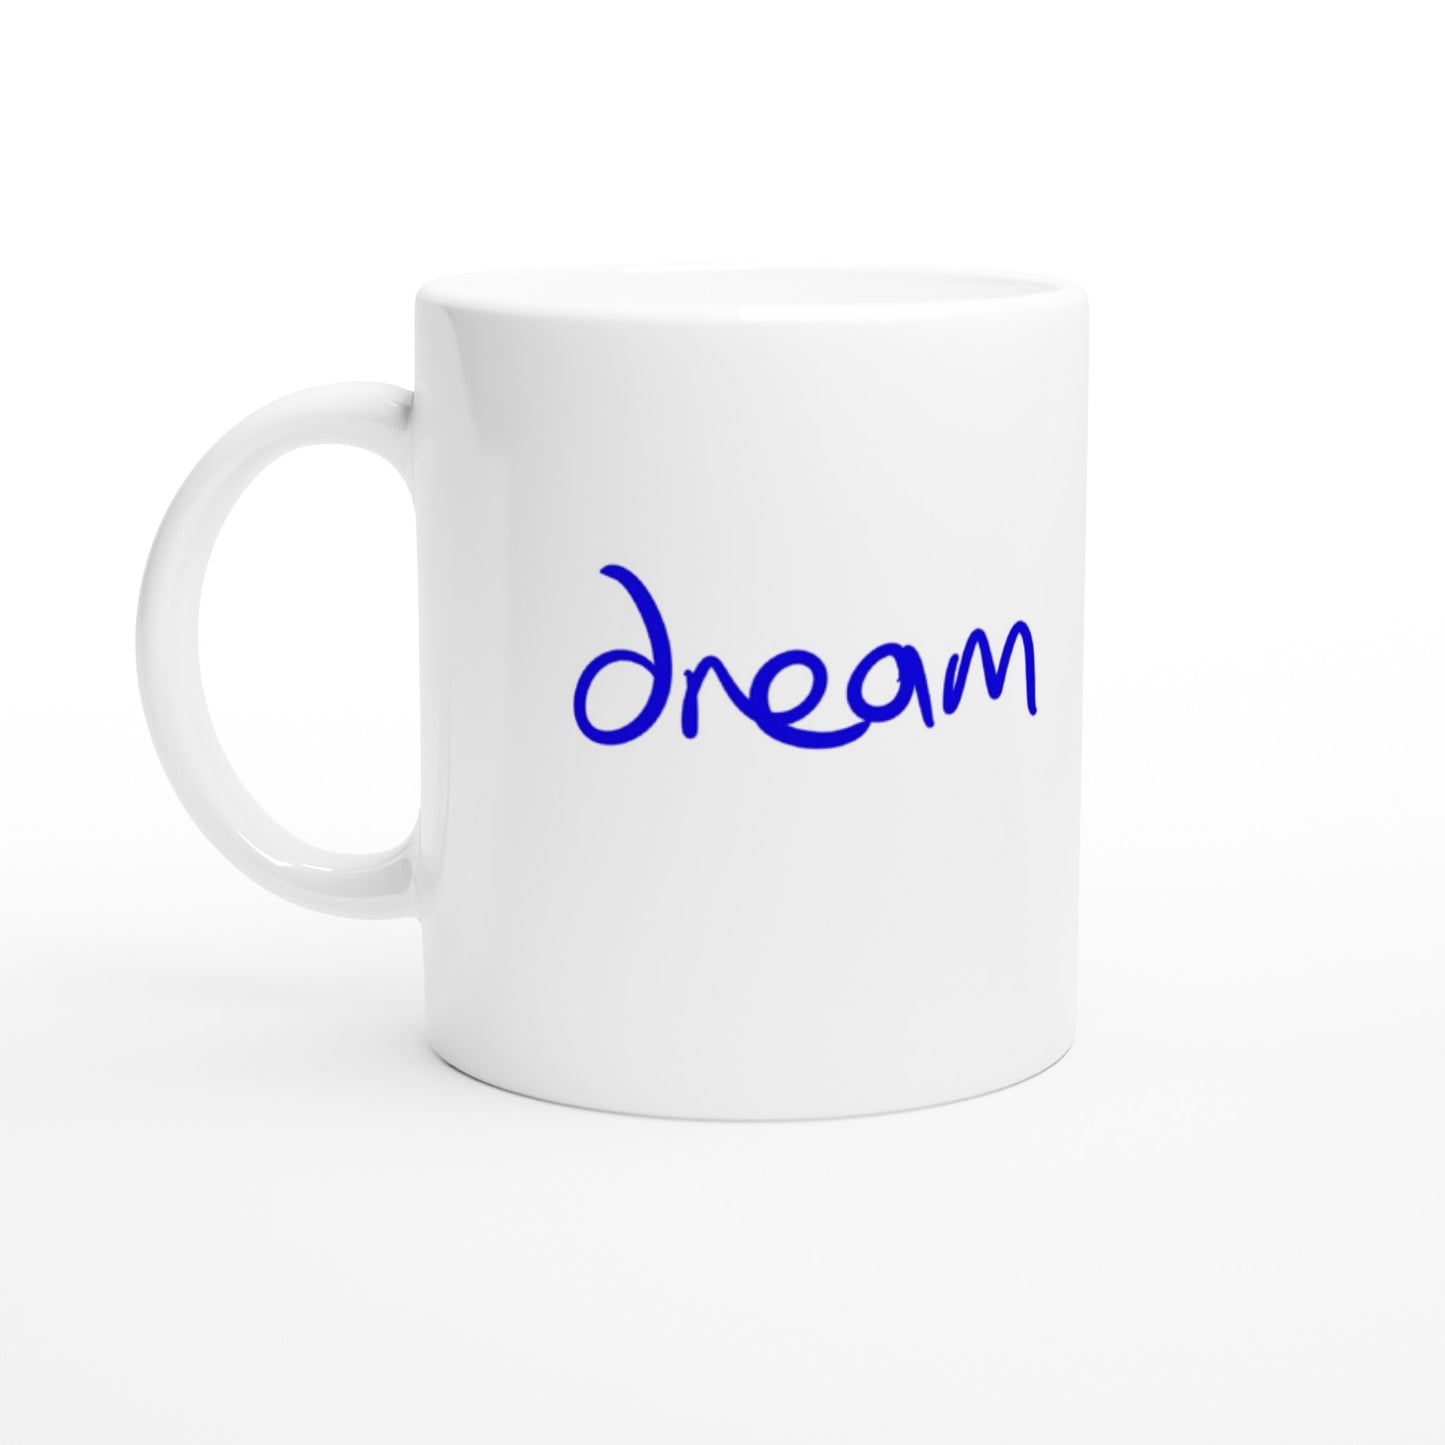 'Dream' Blue on White 11oz Ceramic Mug. Free Shipping.